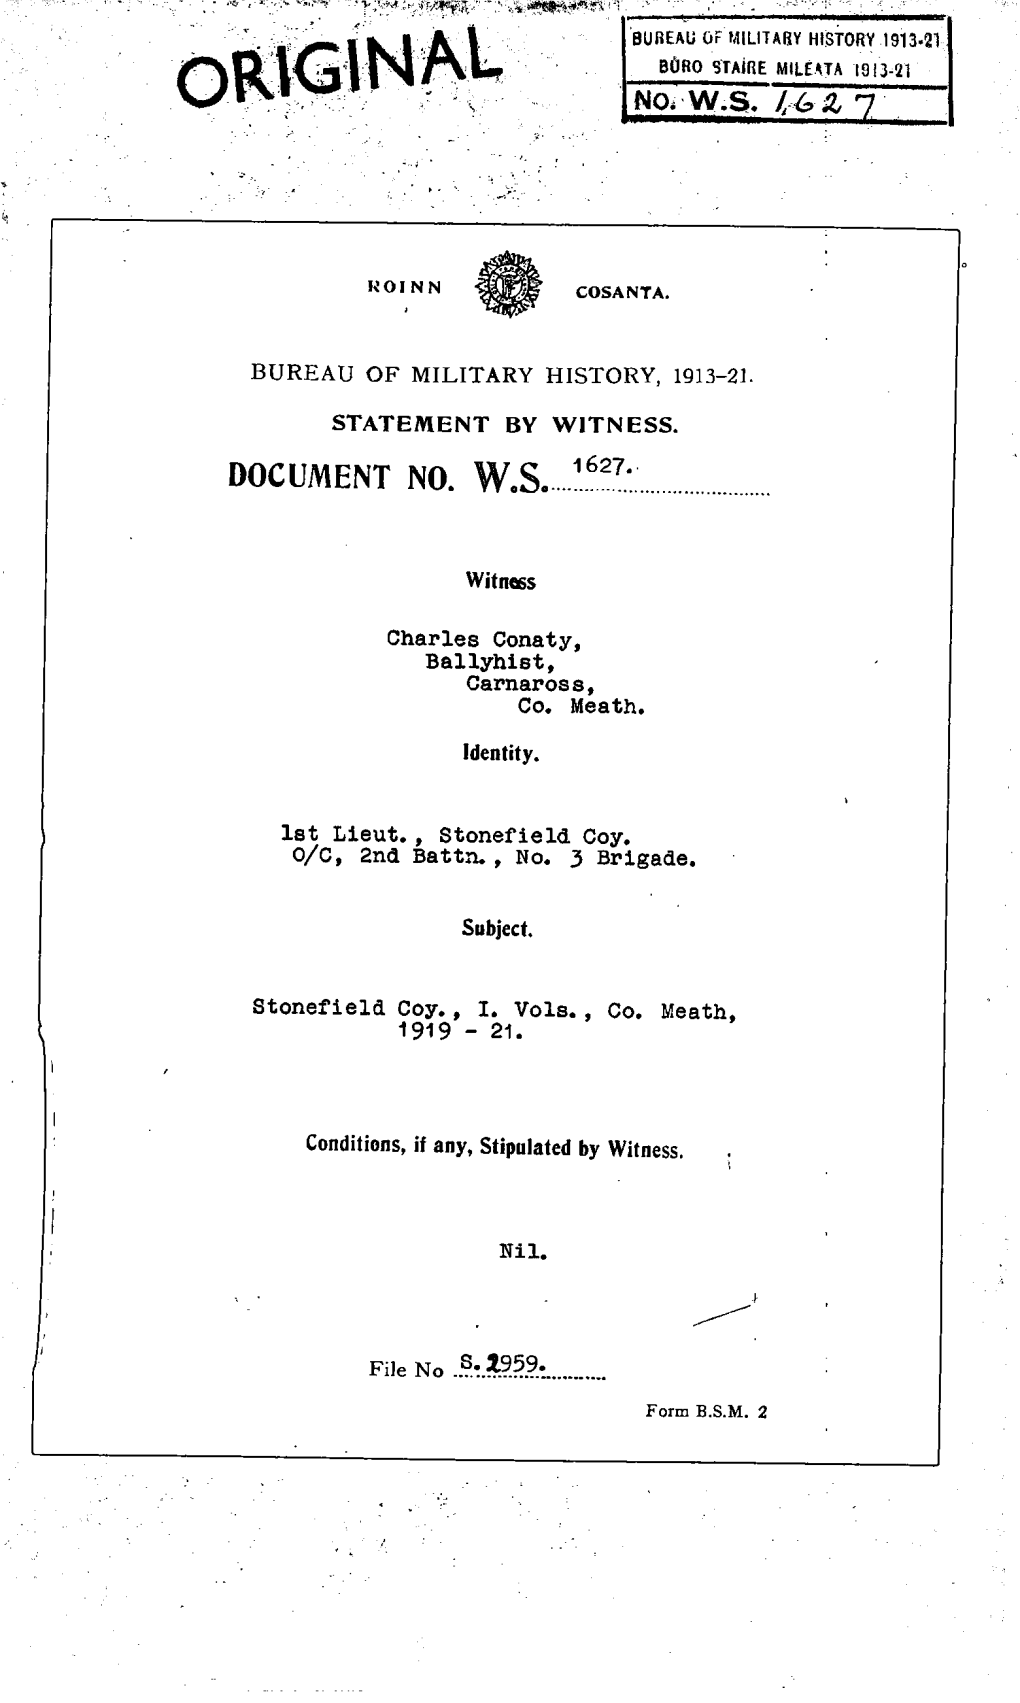 ROINN COSANTA BUREAU of MILITARY HISTORY, 1913-21 STATEMENT by WITNESS DOCUMENT No. W.S. 1627. Witness Charles Conaty, Ballyhist